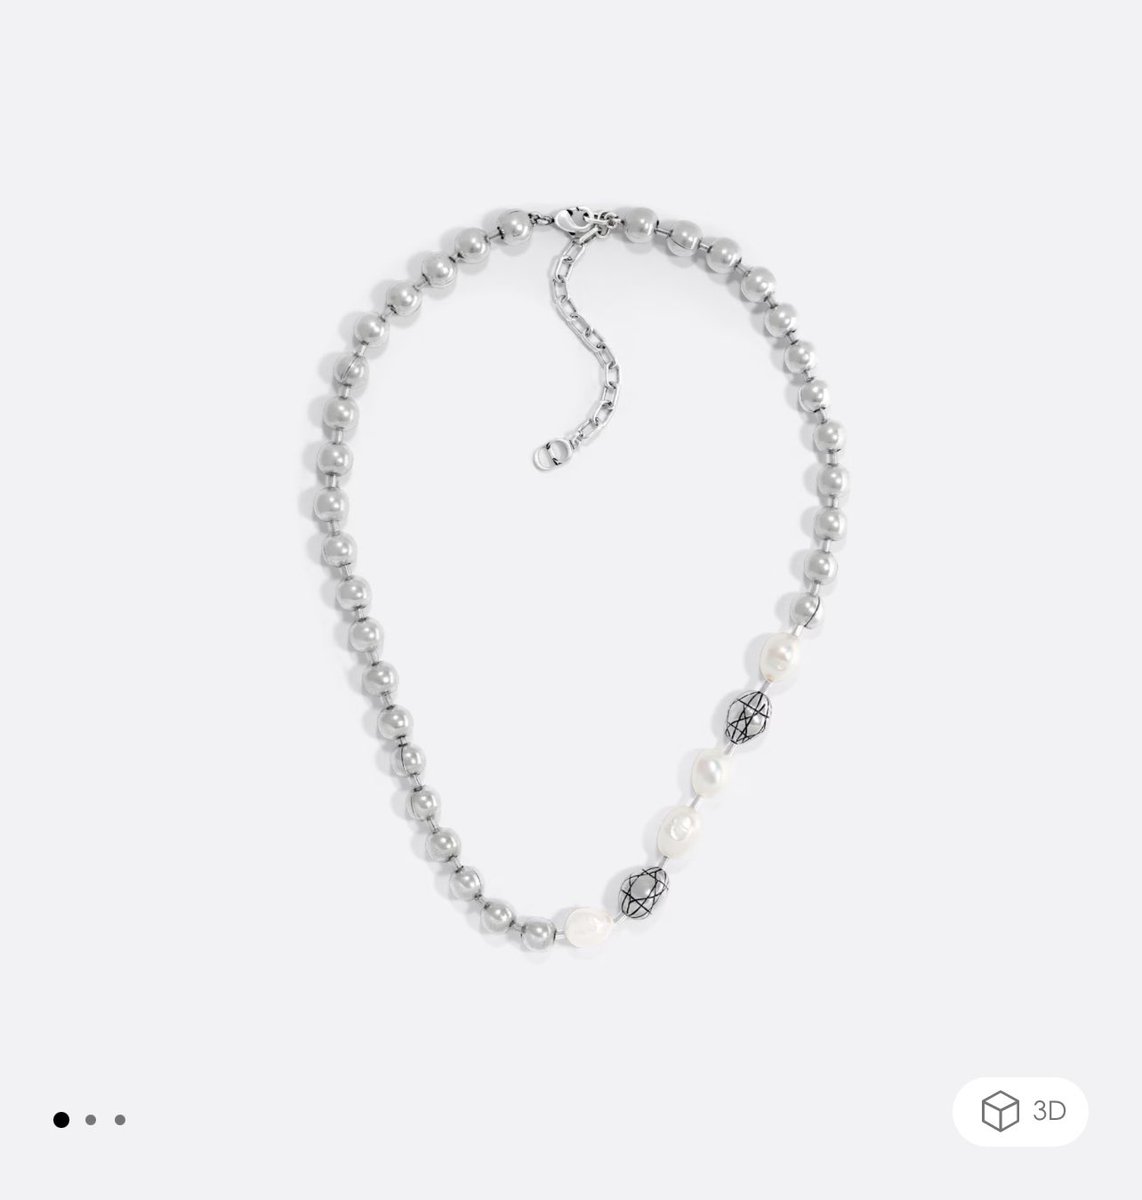 IGS apo555 

Cannage Necklace
Antique Silver-Finish Brass with White Freshwater Pearls #Diorsummer24 
#Dior @Dior dior.com/en_us/fashion/… 
#ApoNattawin @Nnattawin1